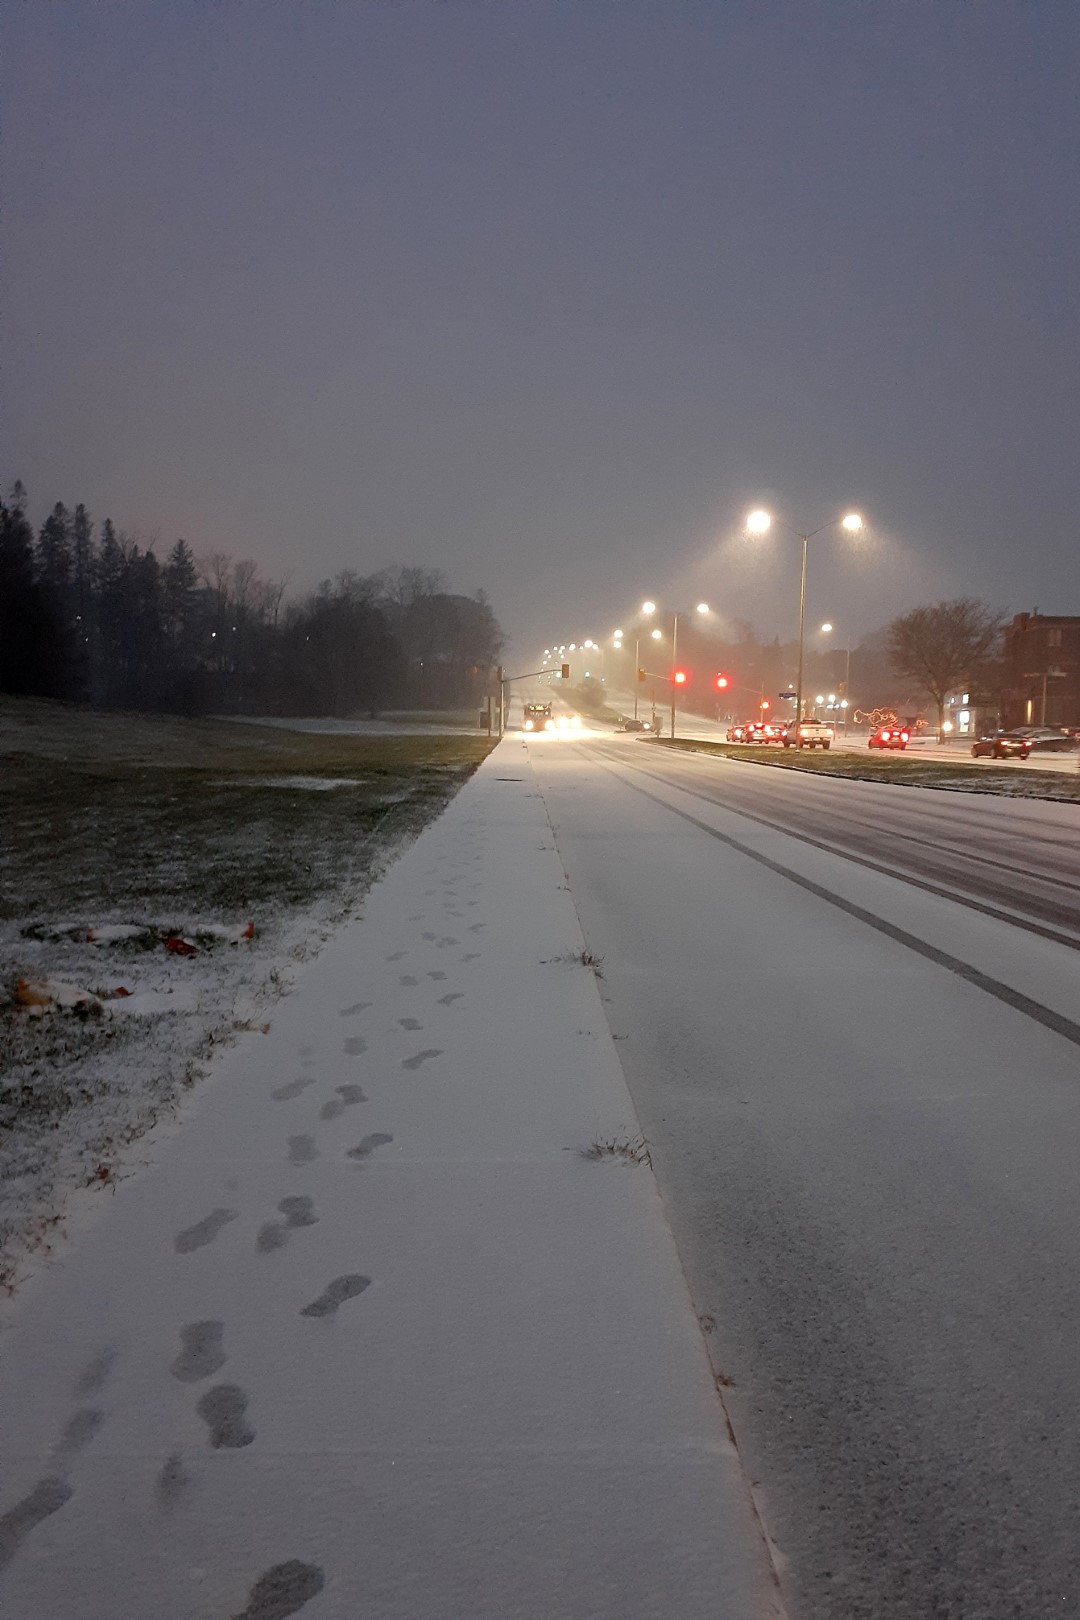 First snowfall, Sunday evening, Carling Road, Ottawa